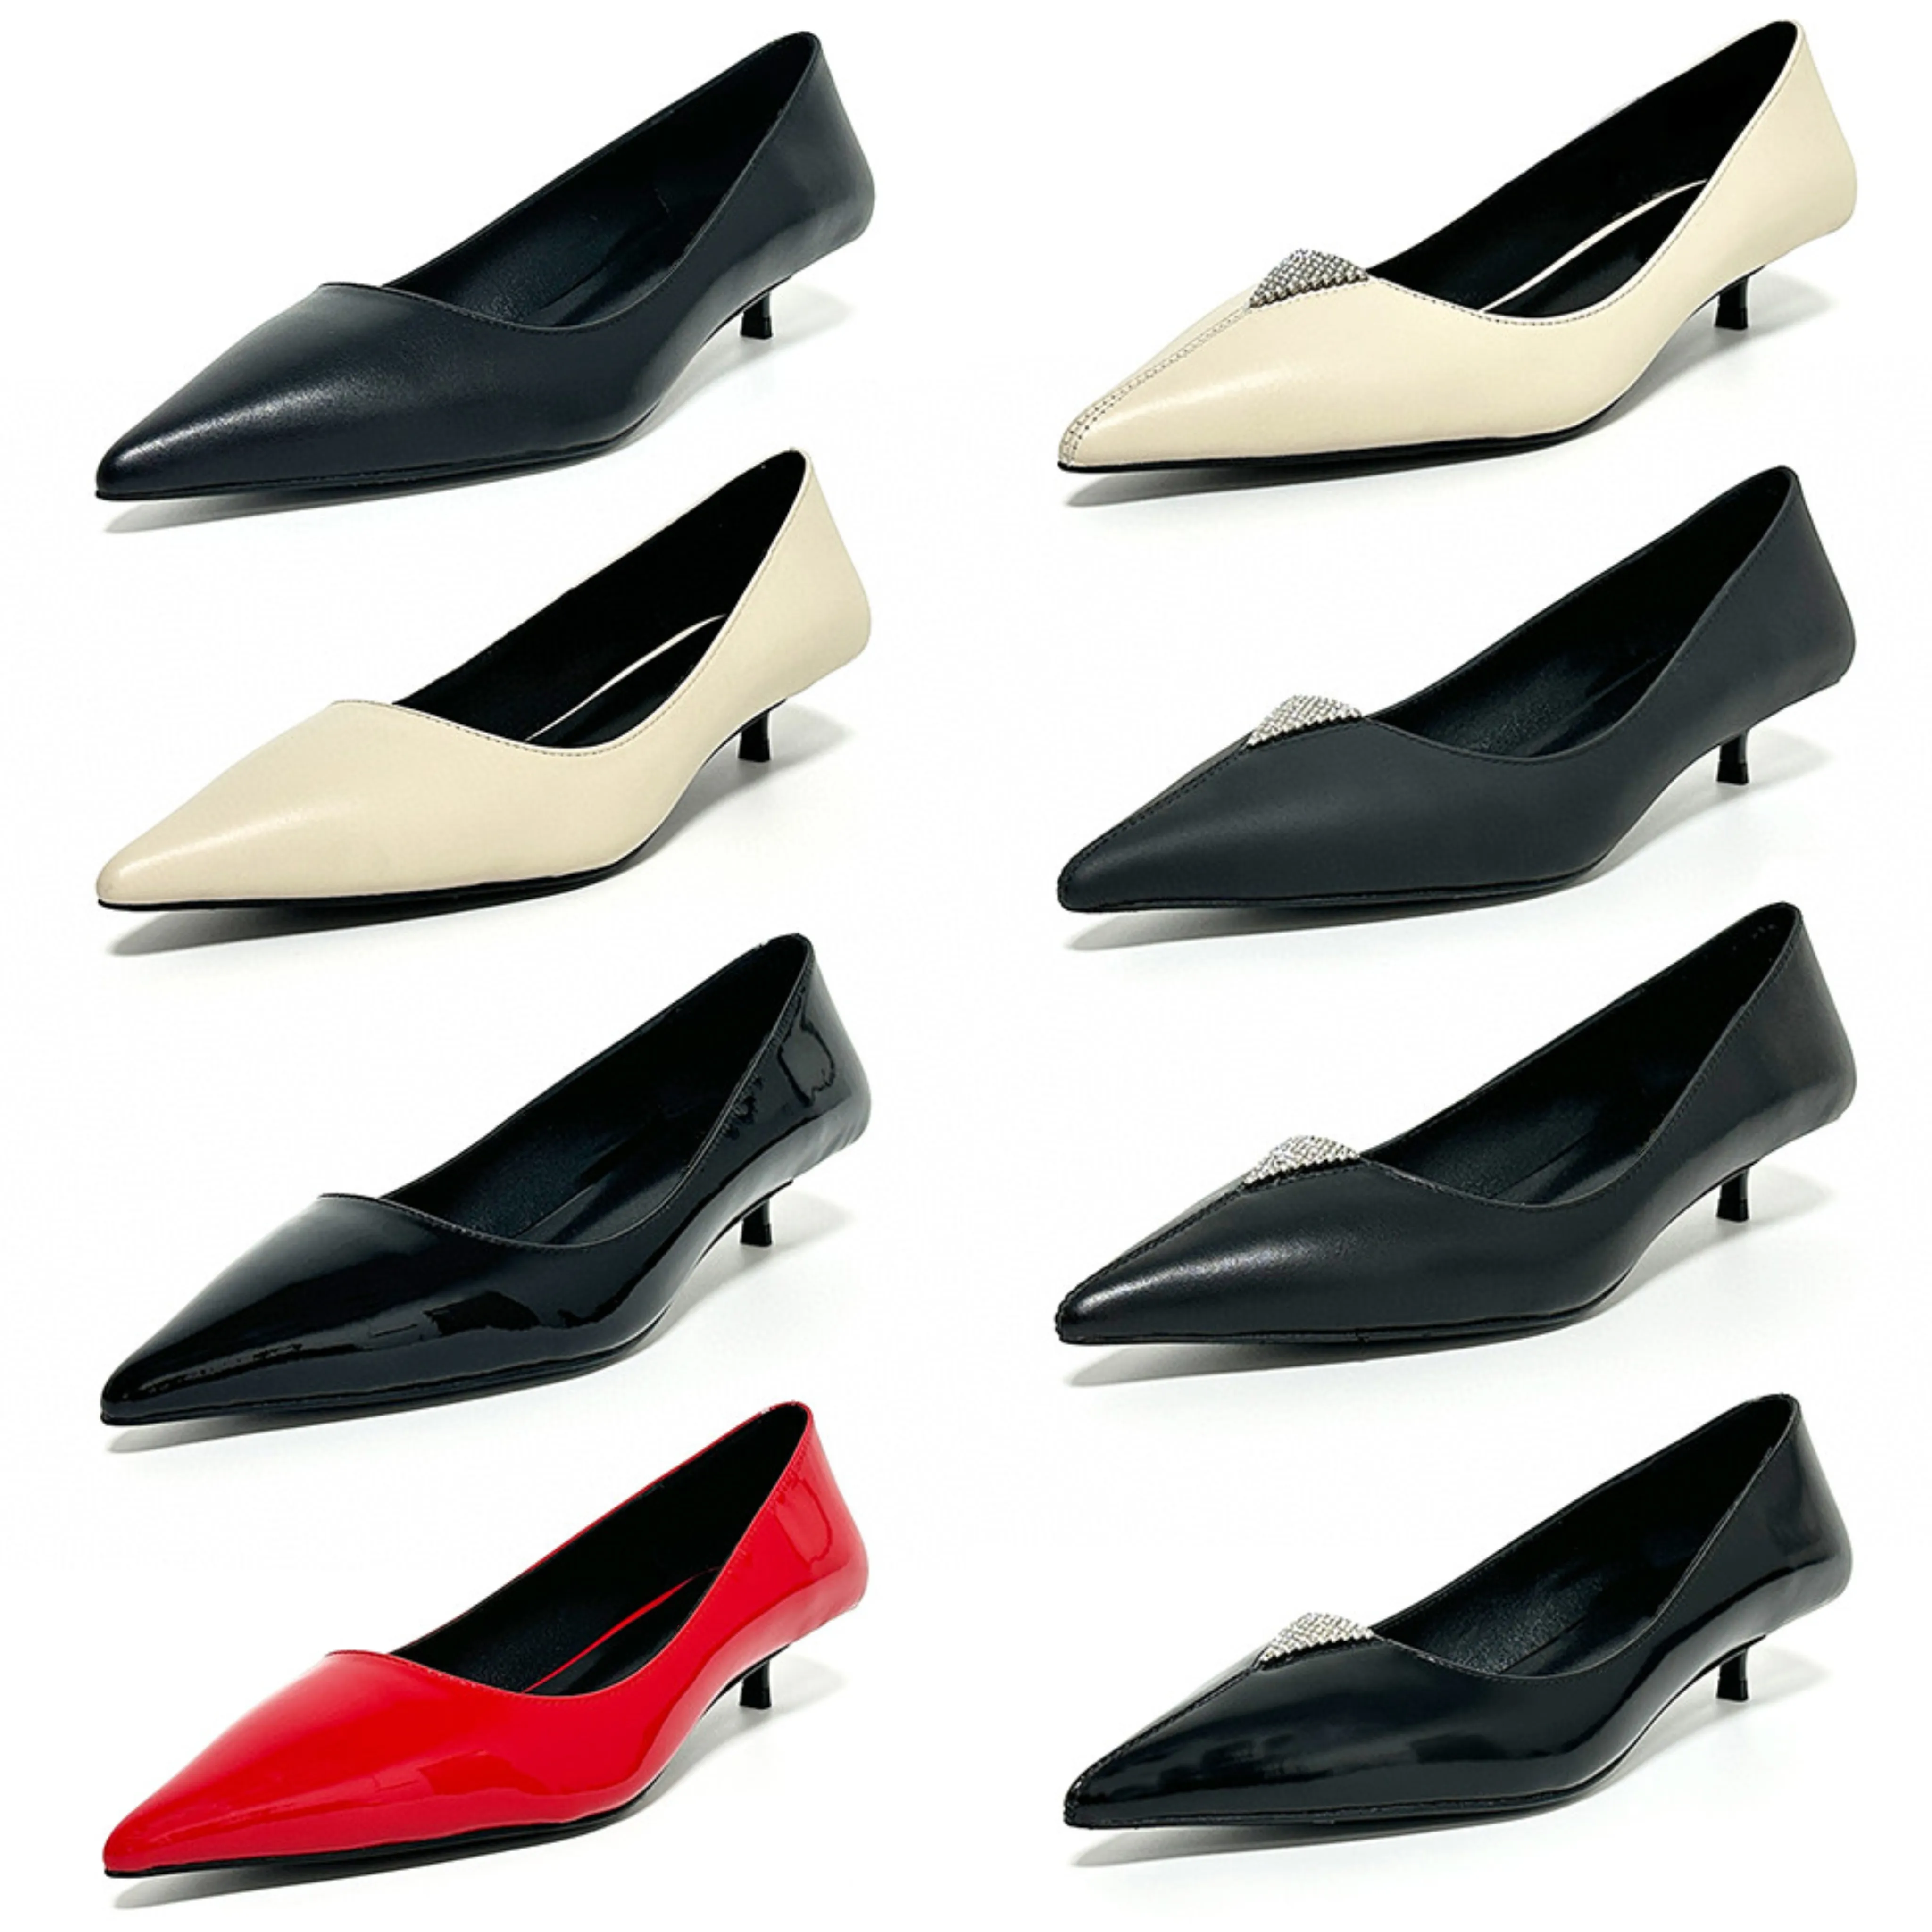 Designer High Heels Women's Low Heel Pointed Toe Luxury Pump Fashionable Versatile Boat Shoes 100% Genuine Leather EU34-44